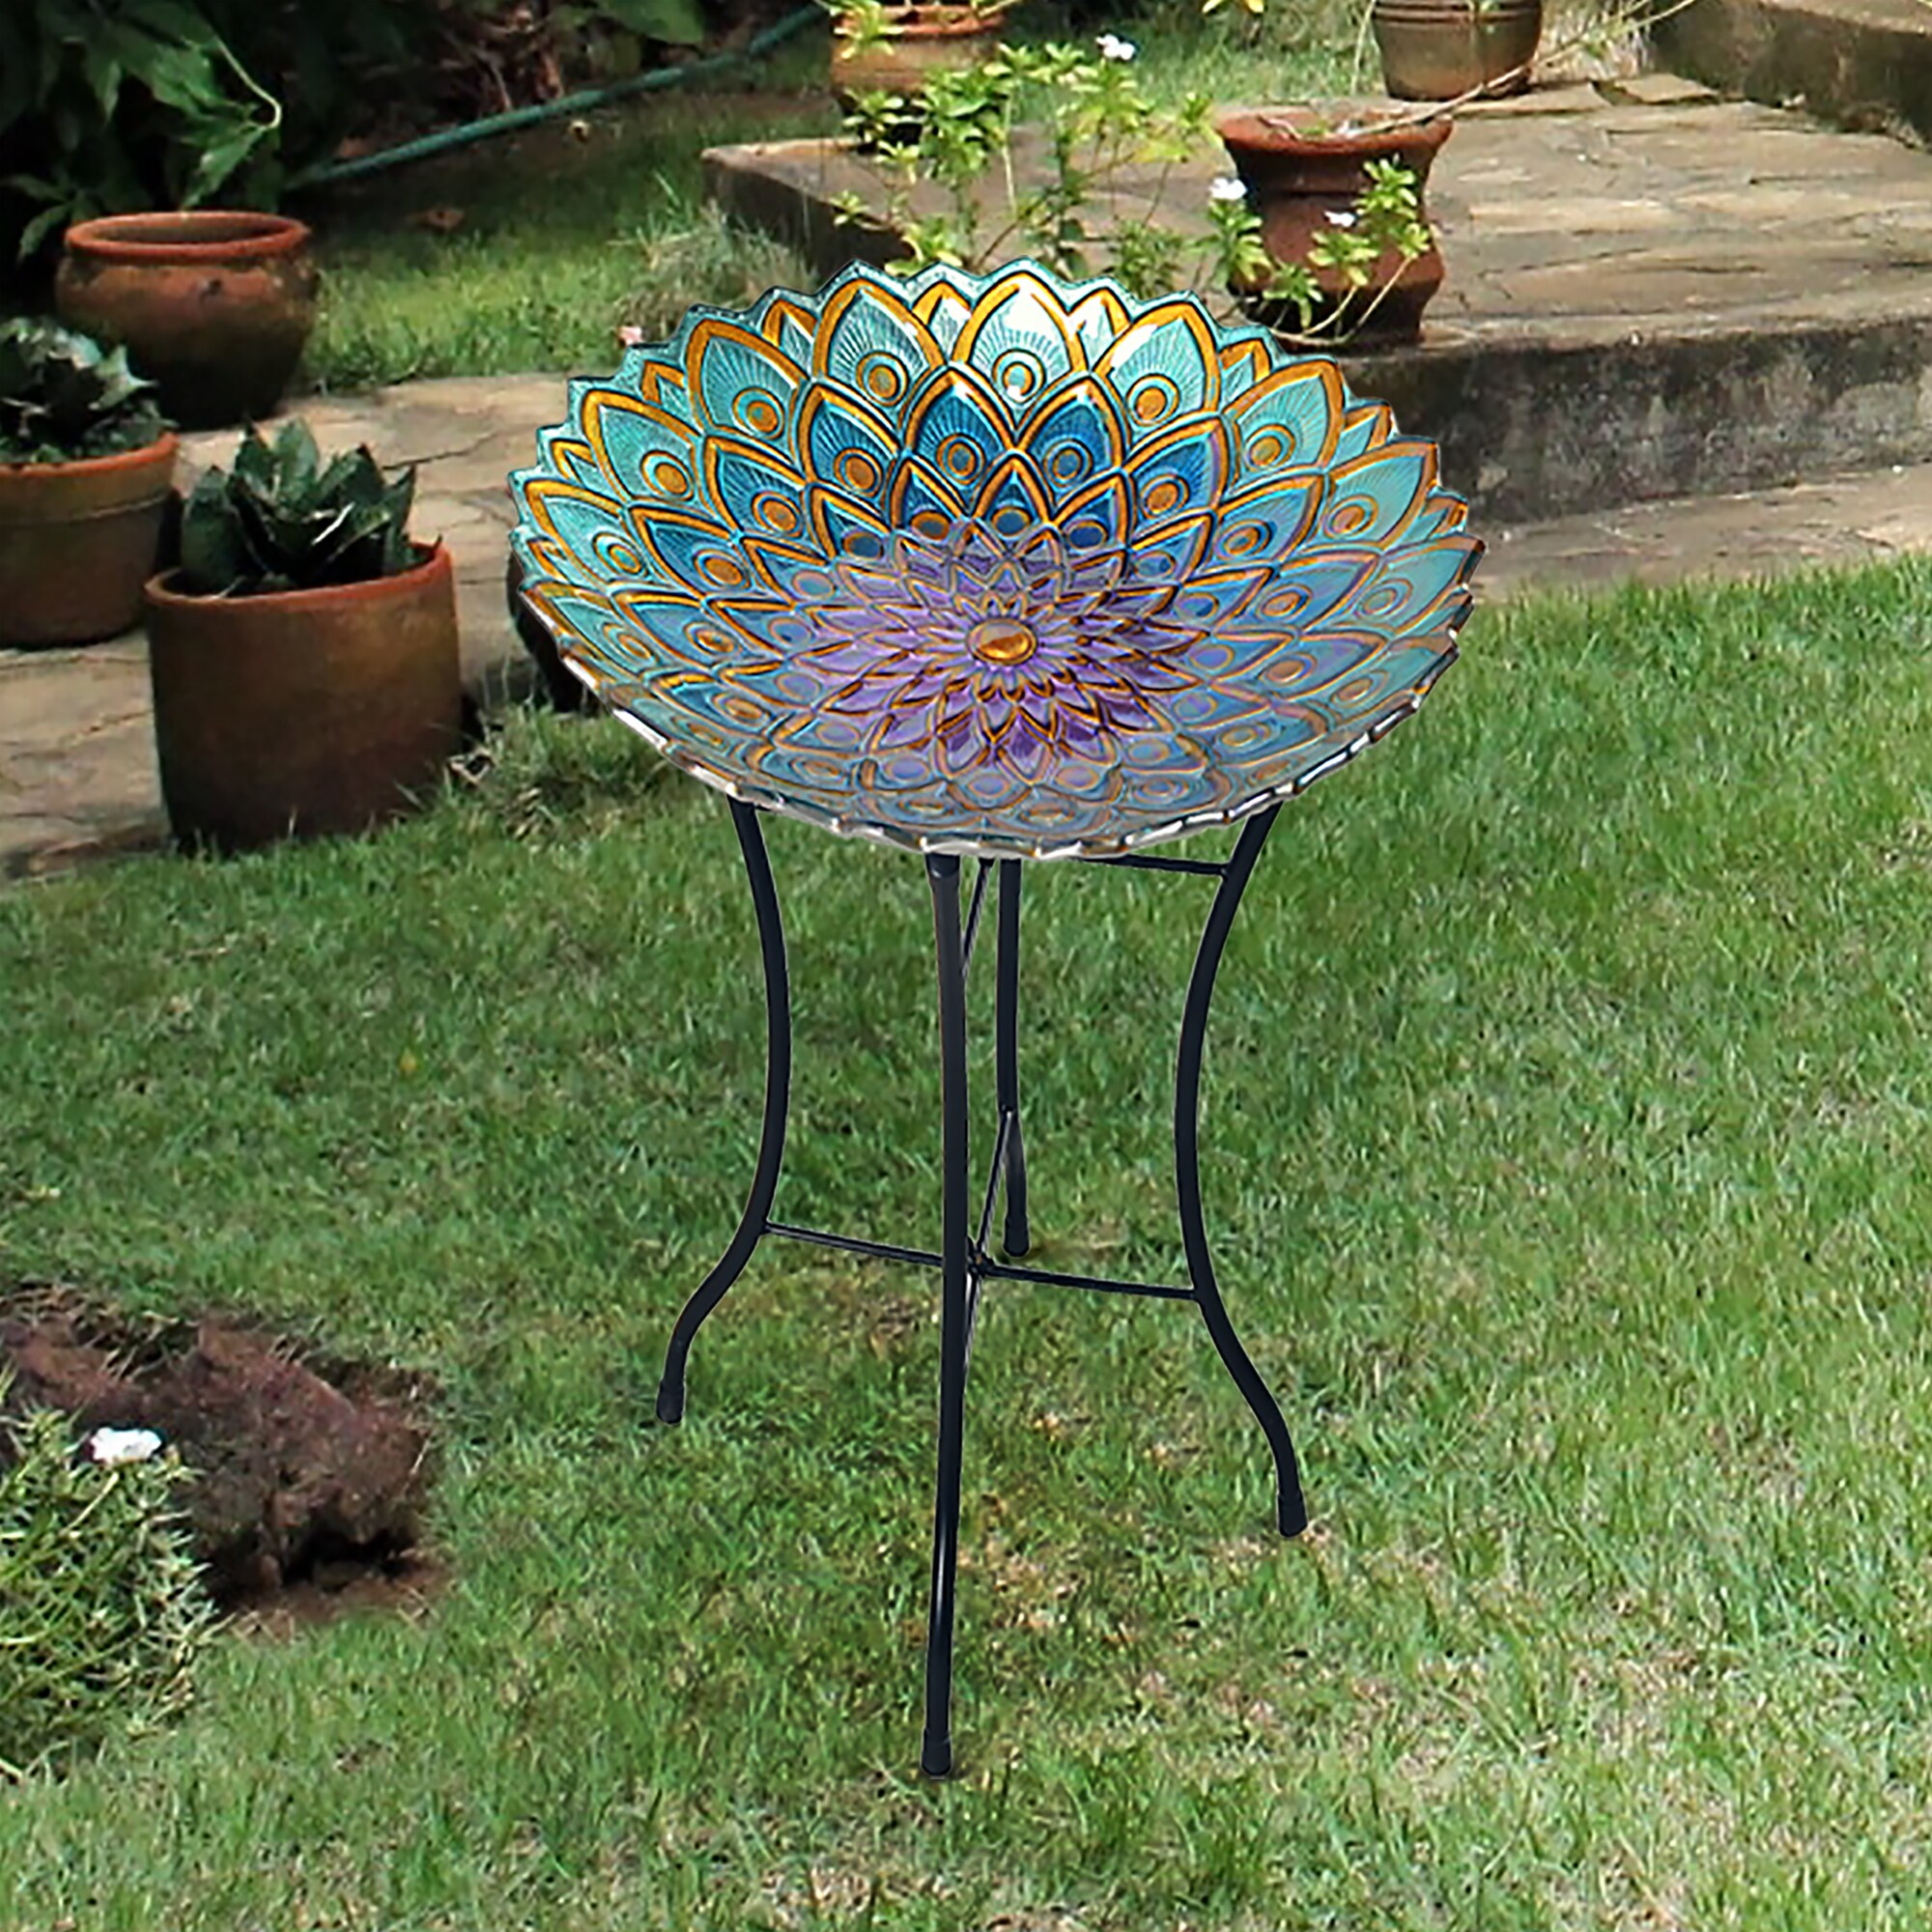 Home Bird Bath Solar Sunflower Design Glass With Stand Garden New Adorable 